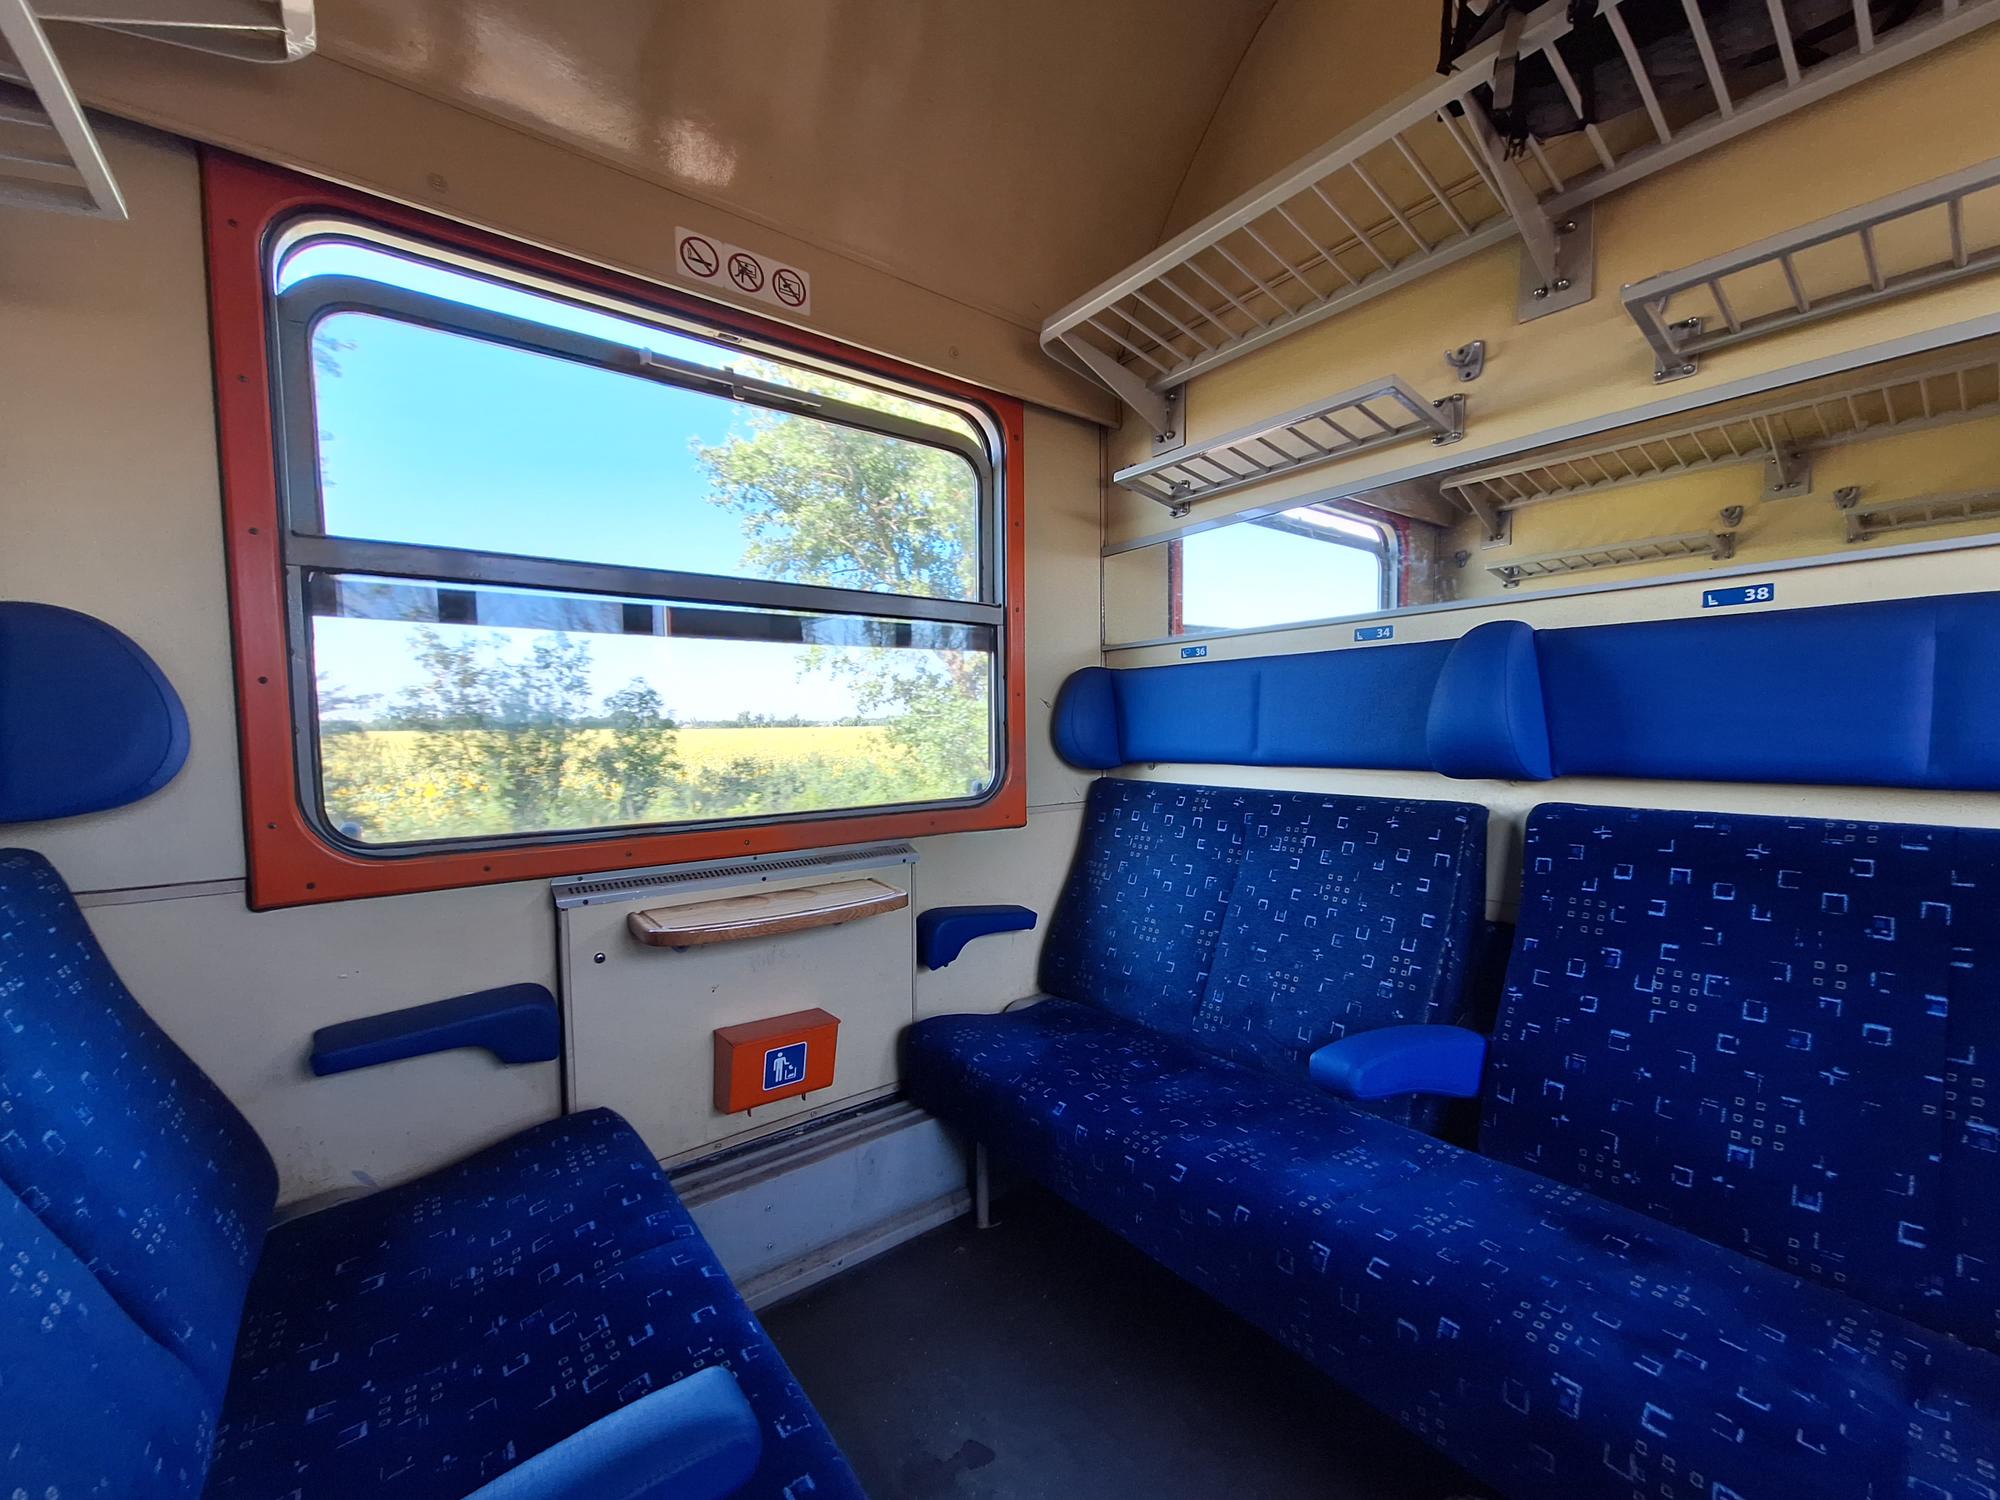 Inside a train compartment